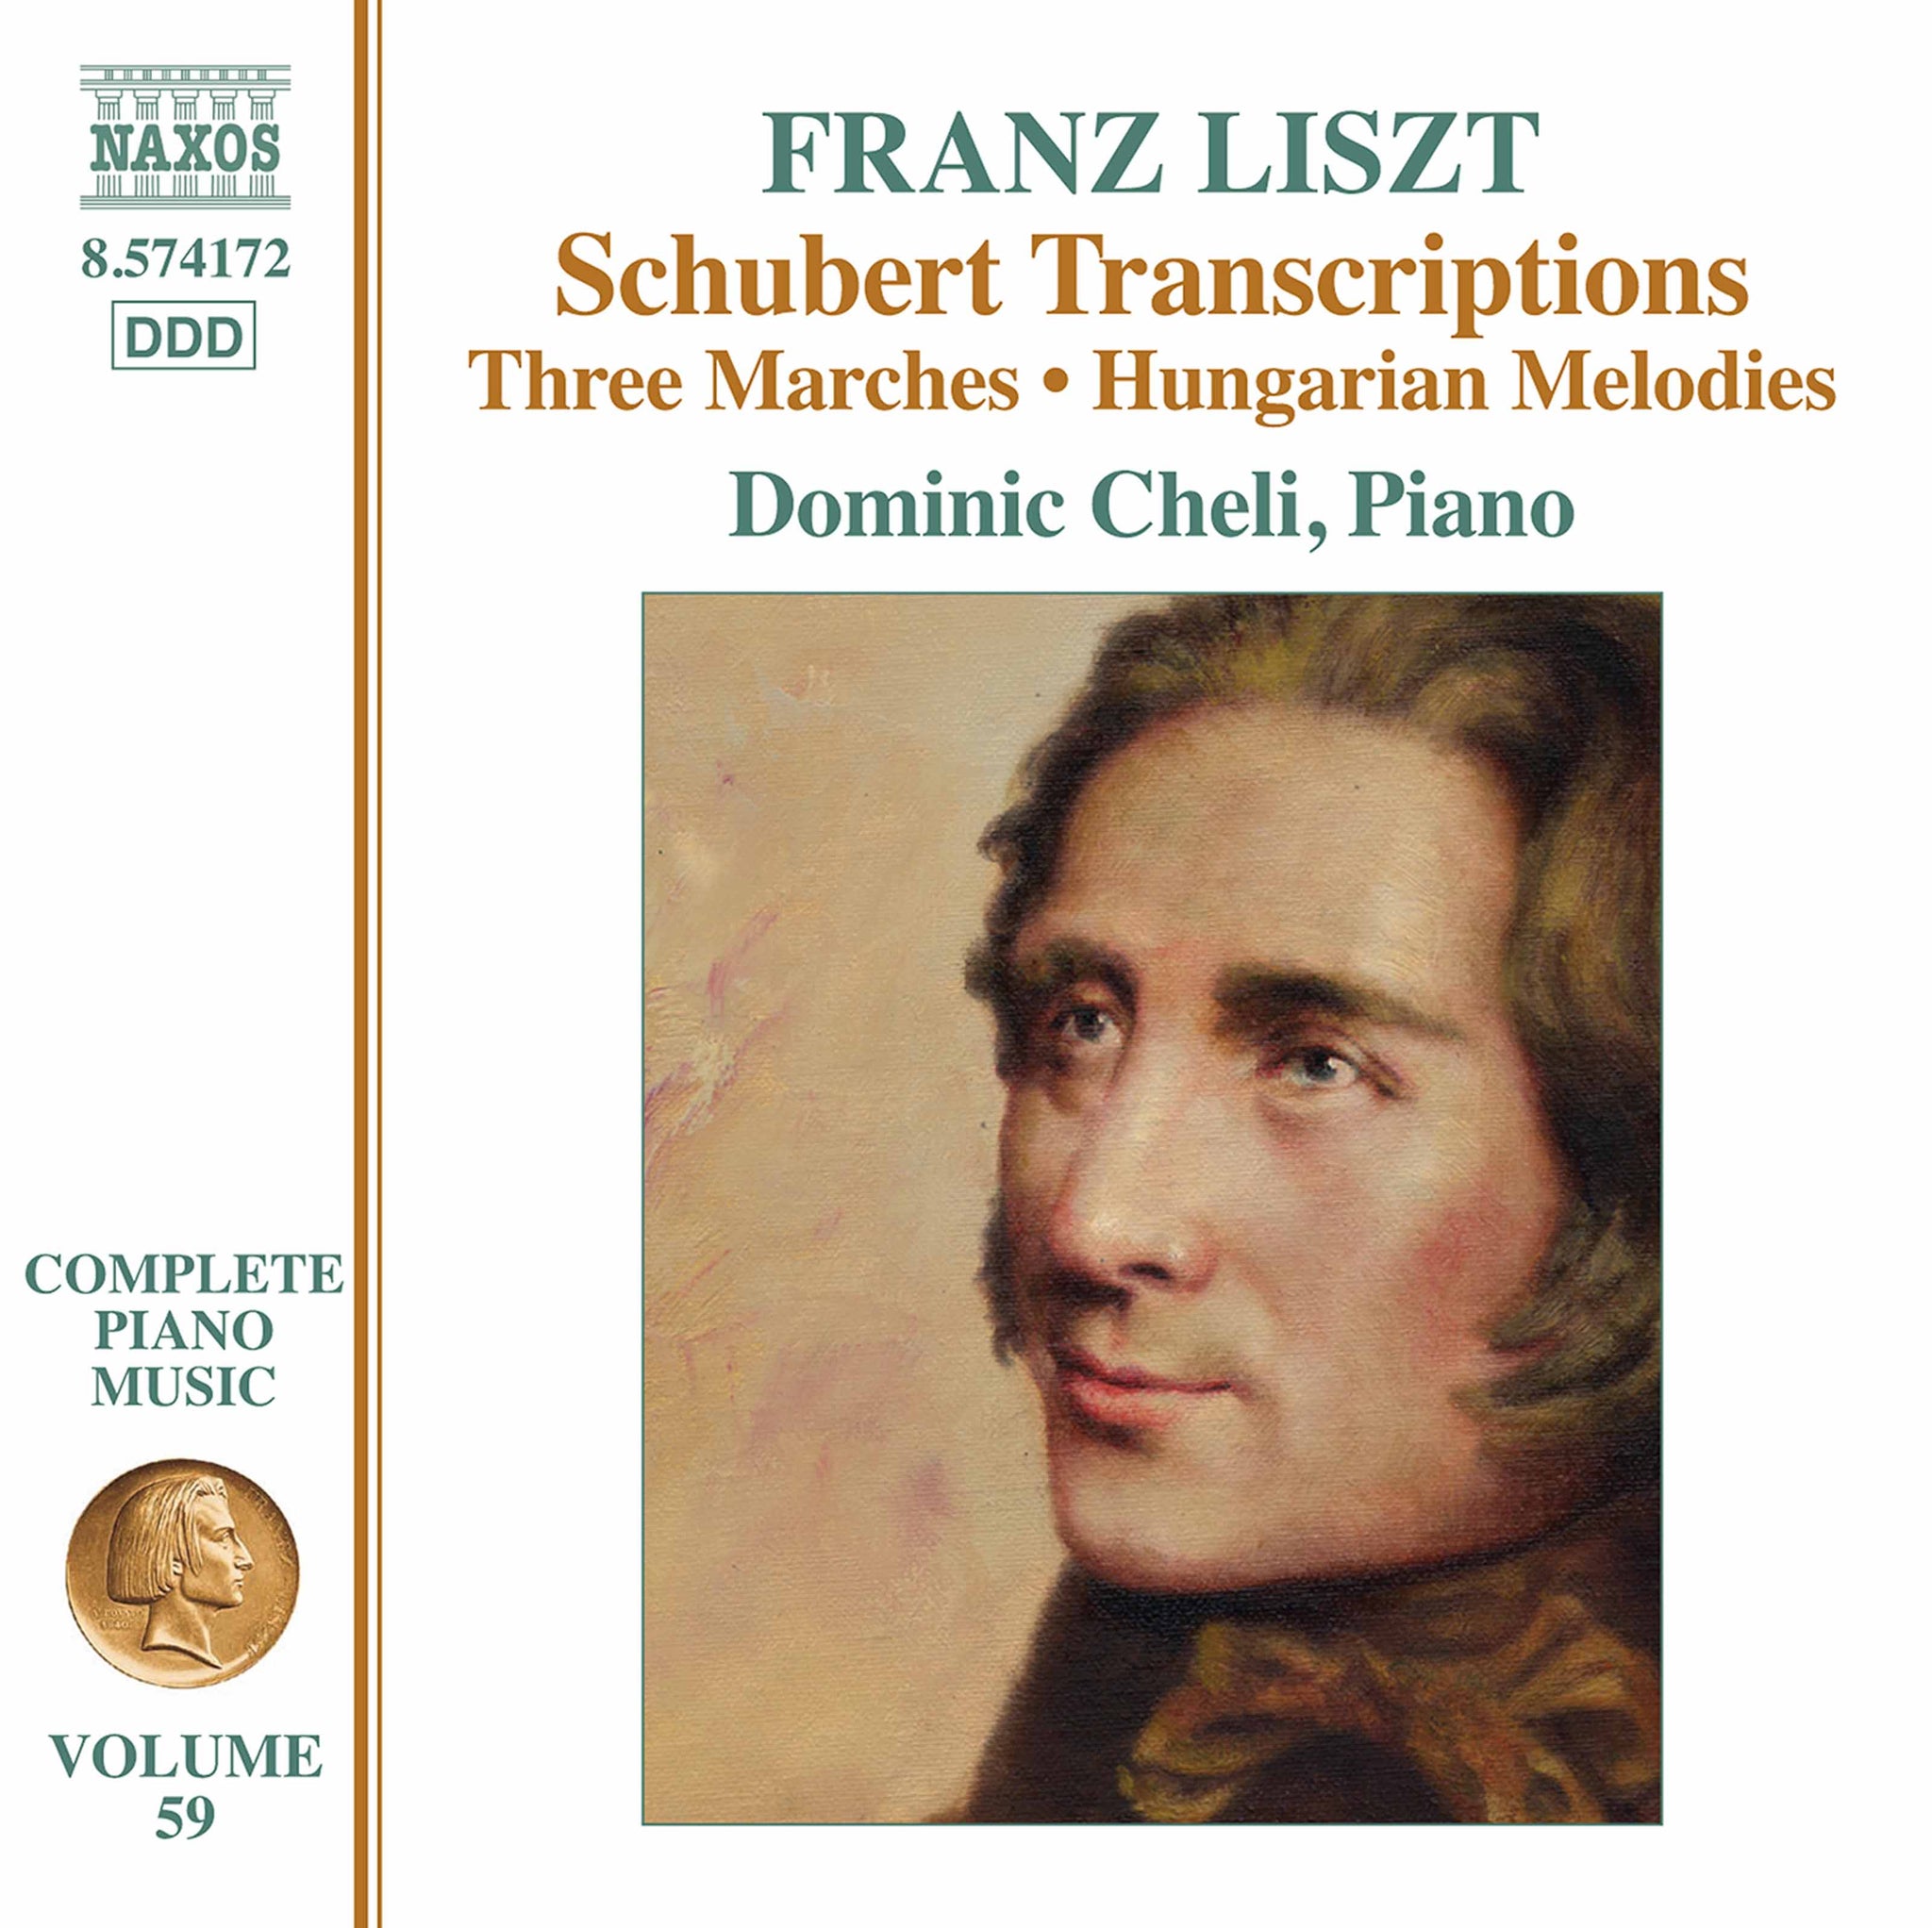 Liszt: Complete Piano Music, Vol. 59 - Schubert Transcriptions